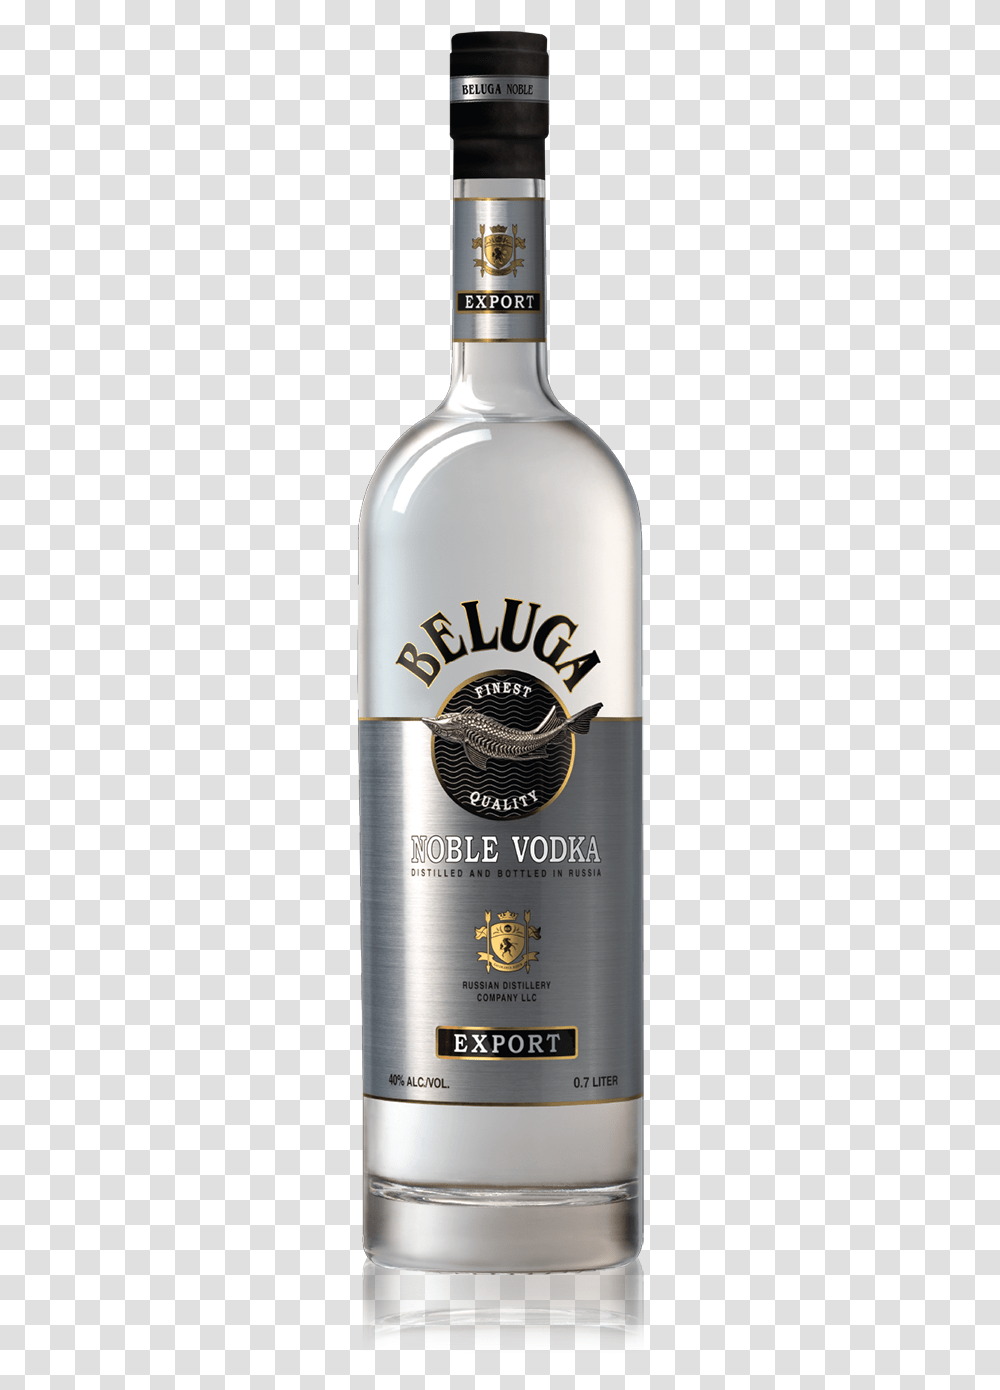 Beluga Noble Vodka, Liquor, Alcohol, Beverage, Absinthe Transparent Png